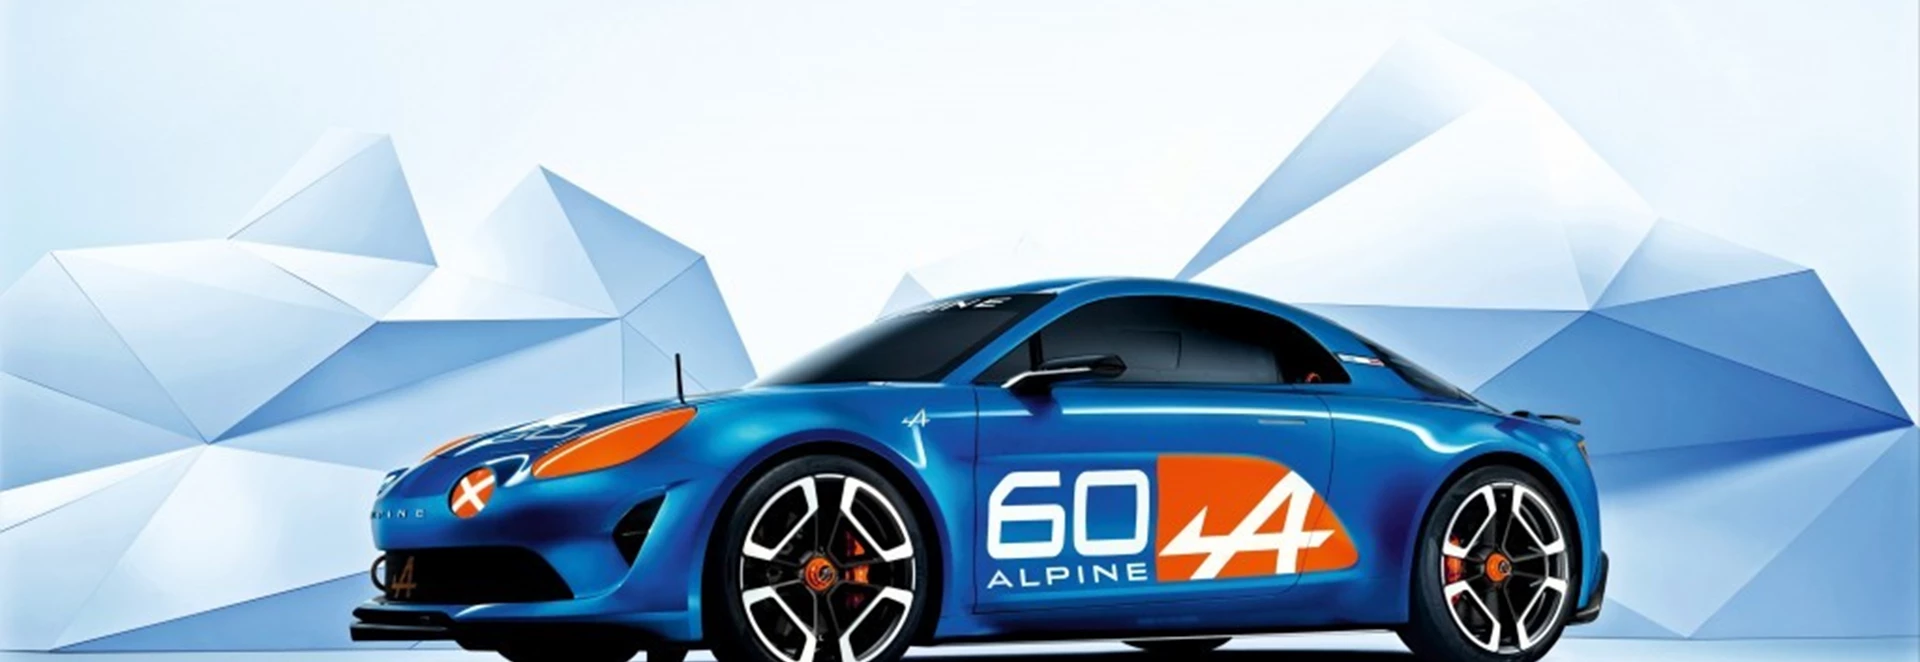 Renault Alpine reveal date announced